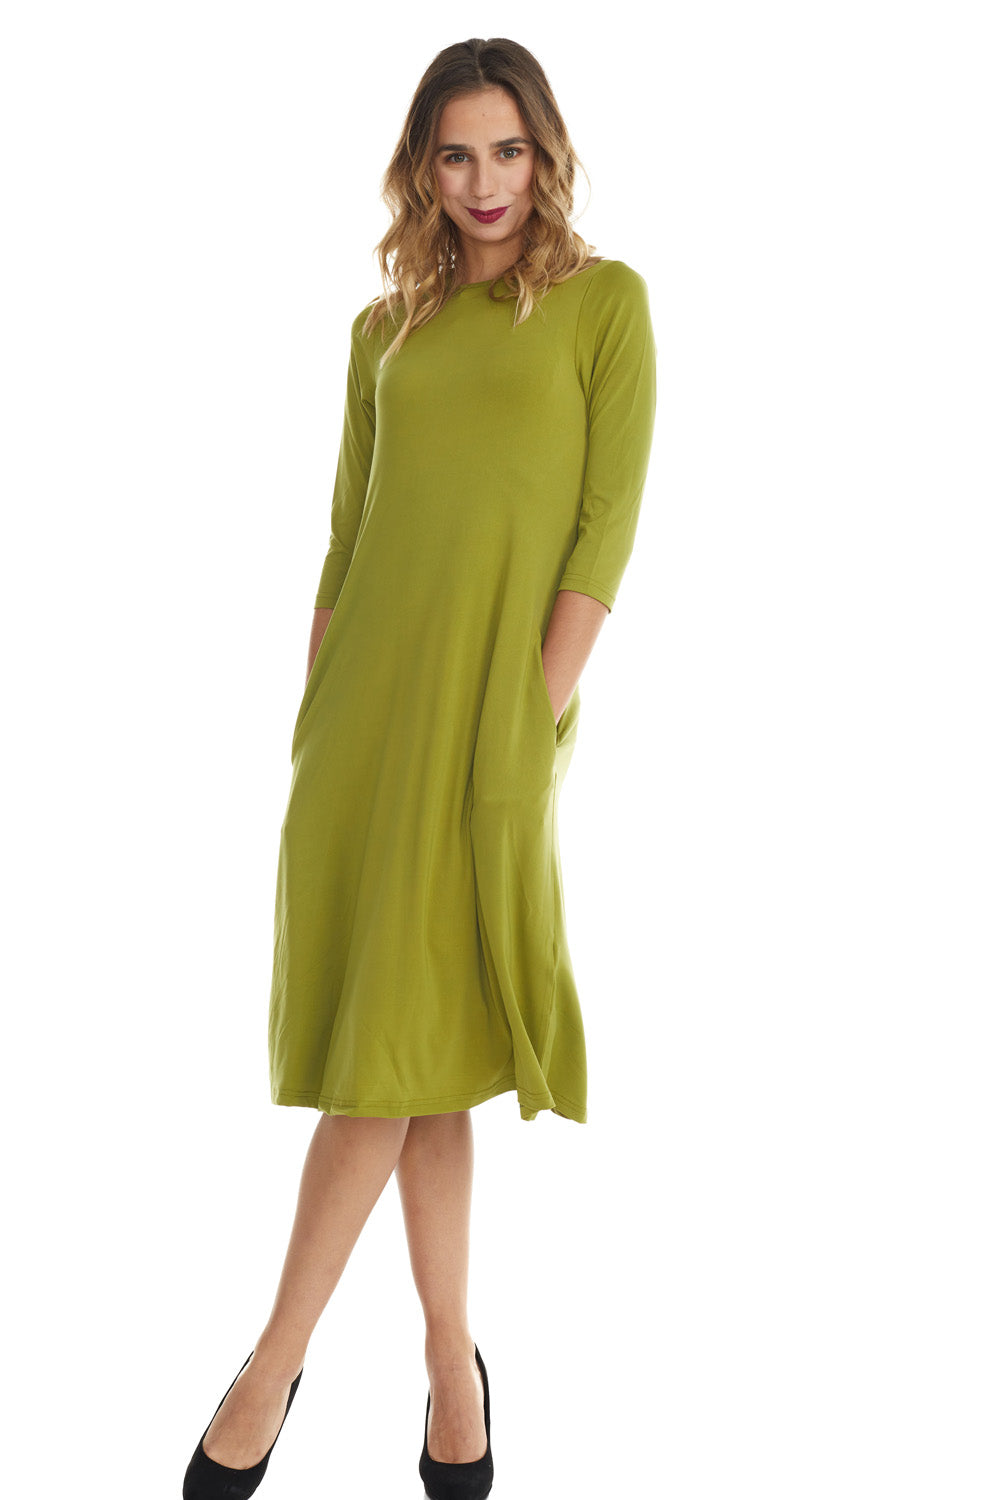 green flary below knee length 3/4 sleeve crew neck modest tznius a-line dress with pockets